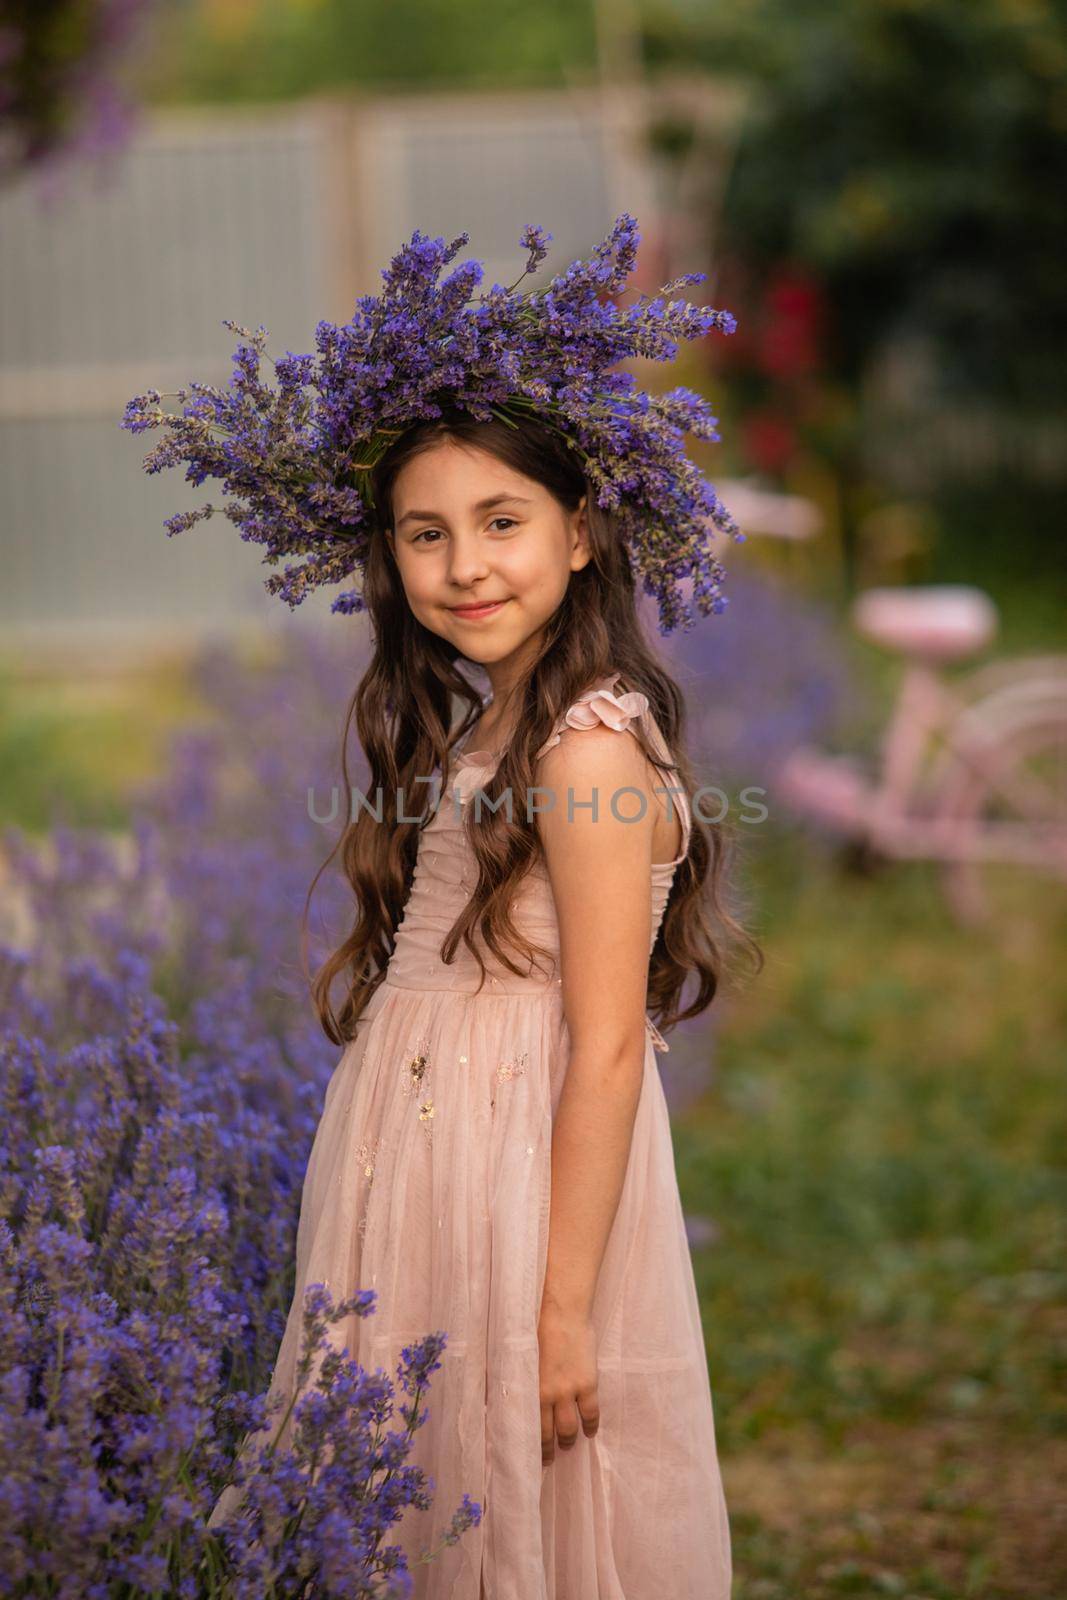 Beautiful long hair girl near lavender bushes by oksix